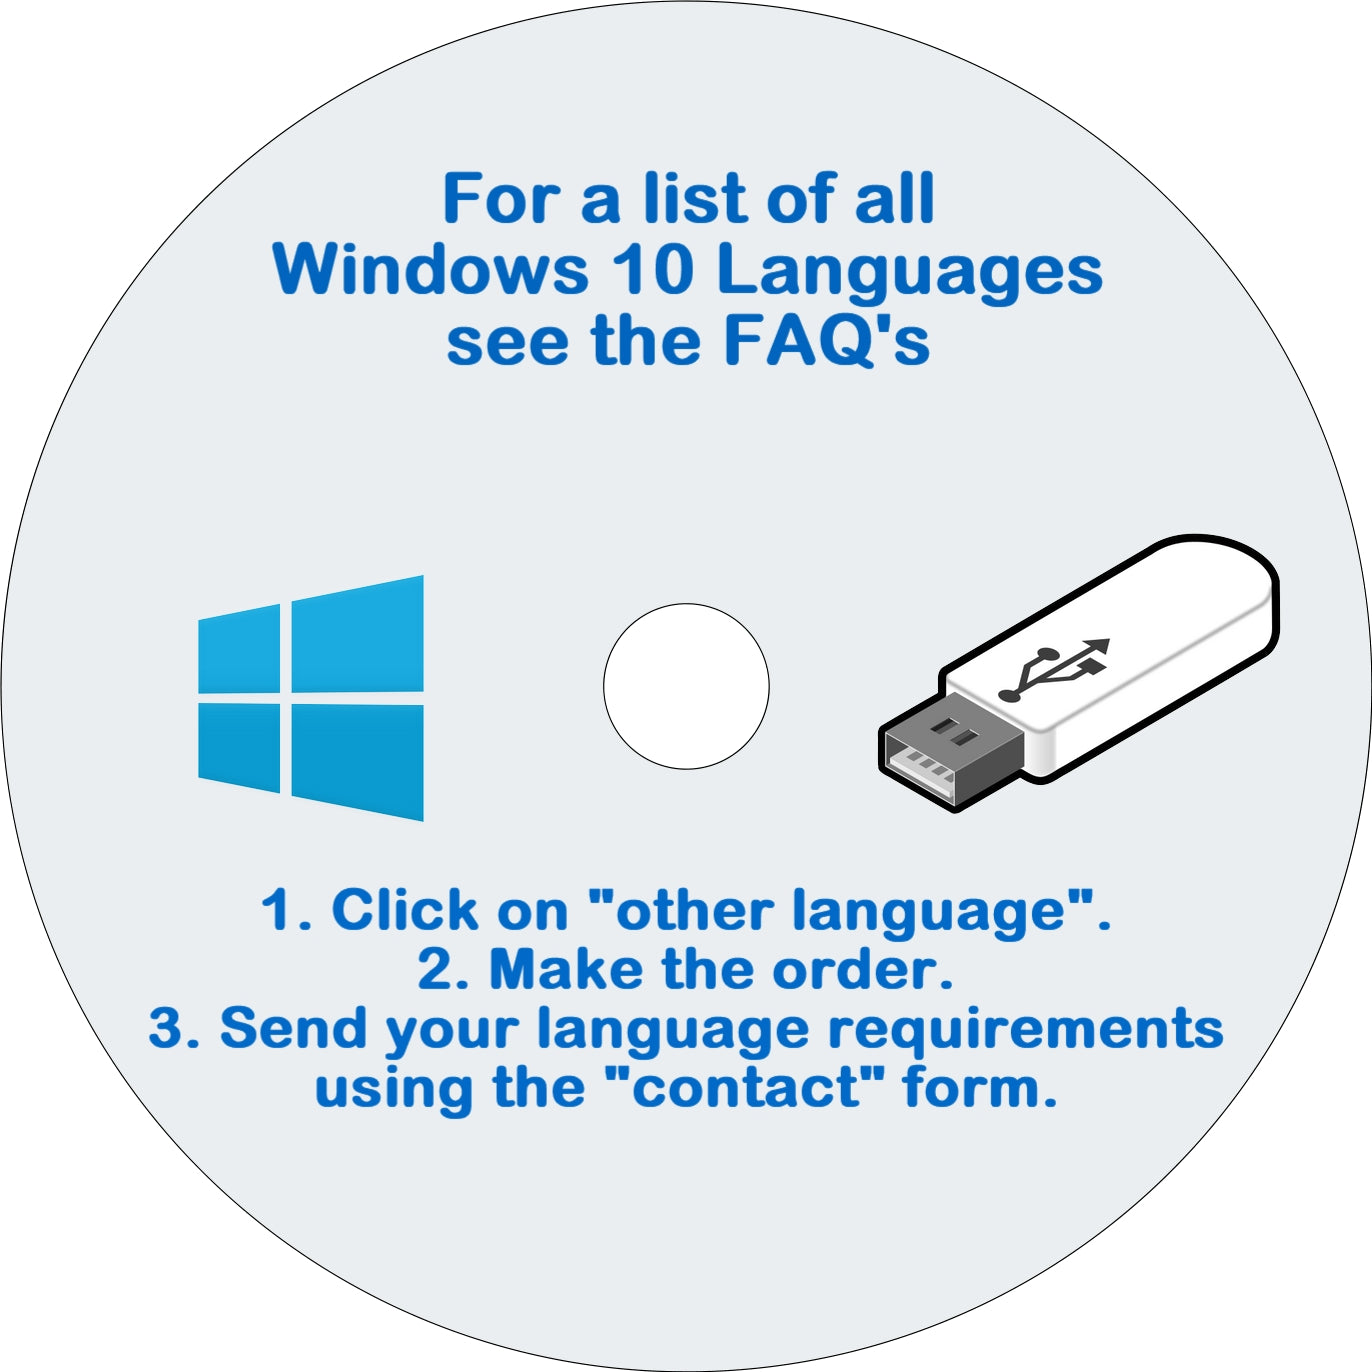 Windows 10 Disk + USB 32 Bit+64 Bit